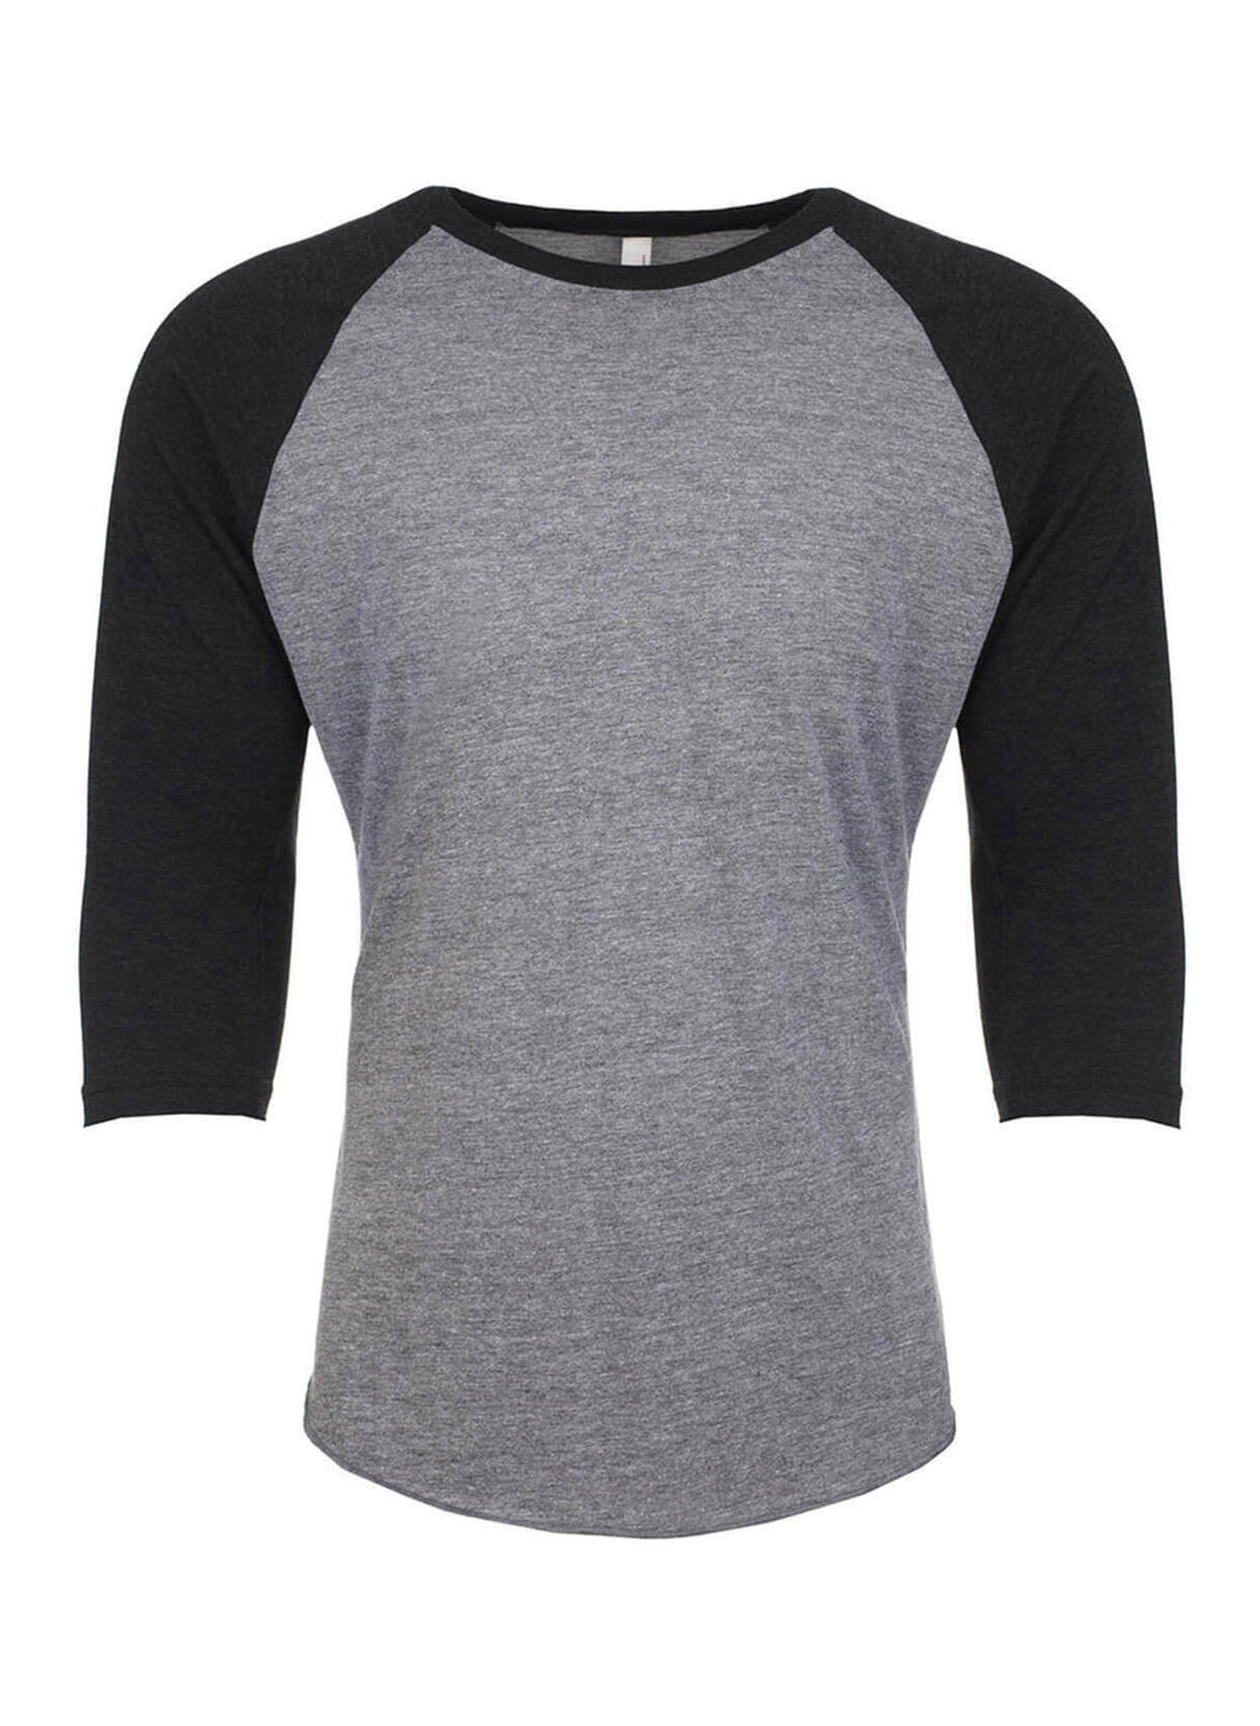 Next Level Men's Vintage Black / Premium Heather Unisex Triblend 3/4-Sleeve Raglan T-Shirt